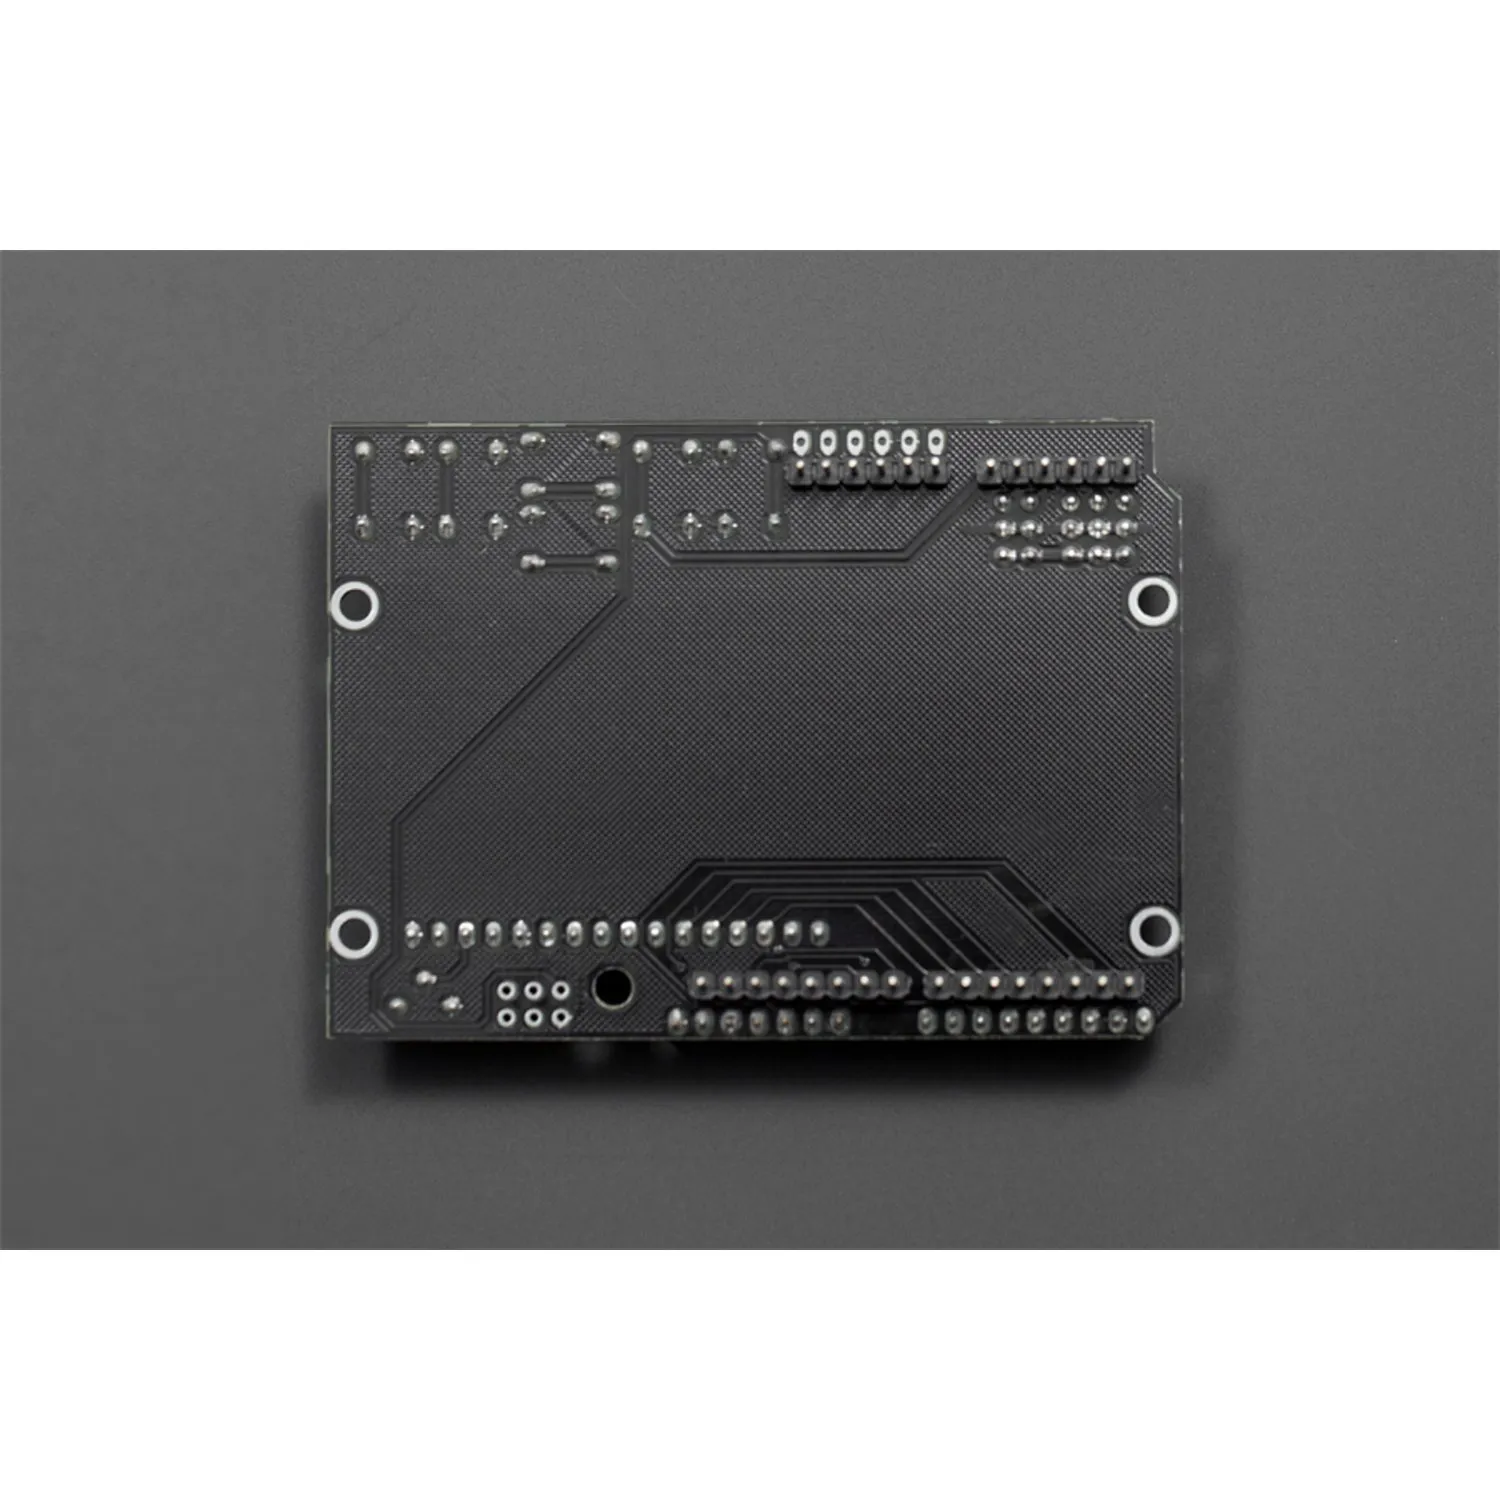 Photo of 1602 LCD Keypad Shield For Arduino